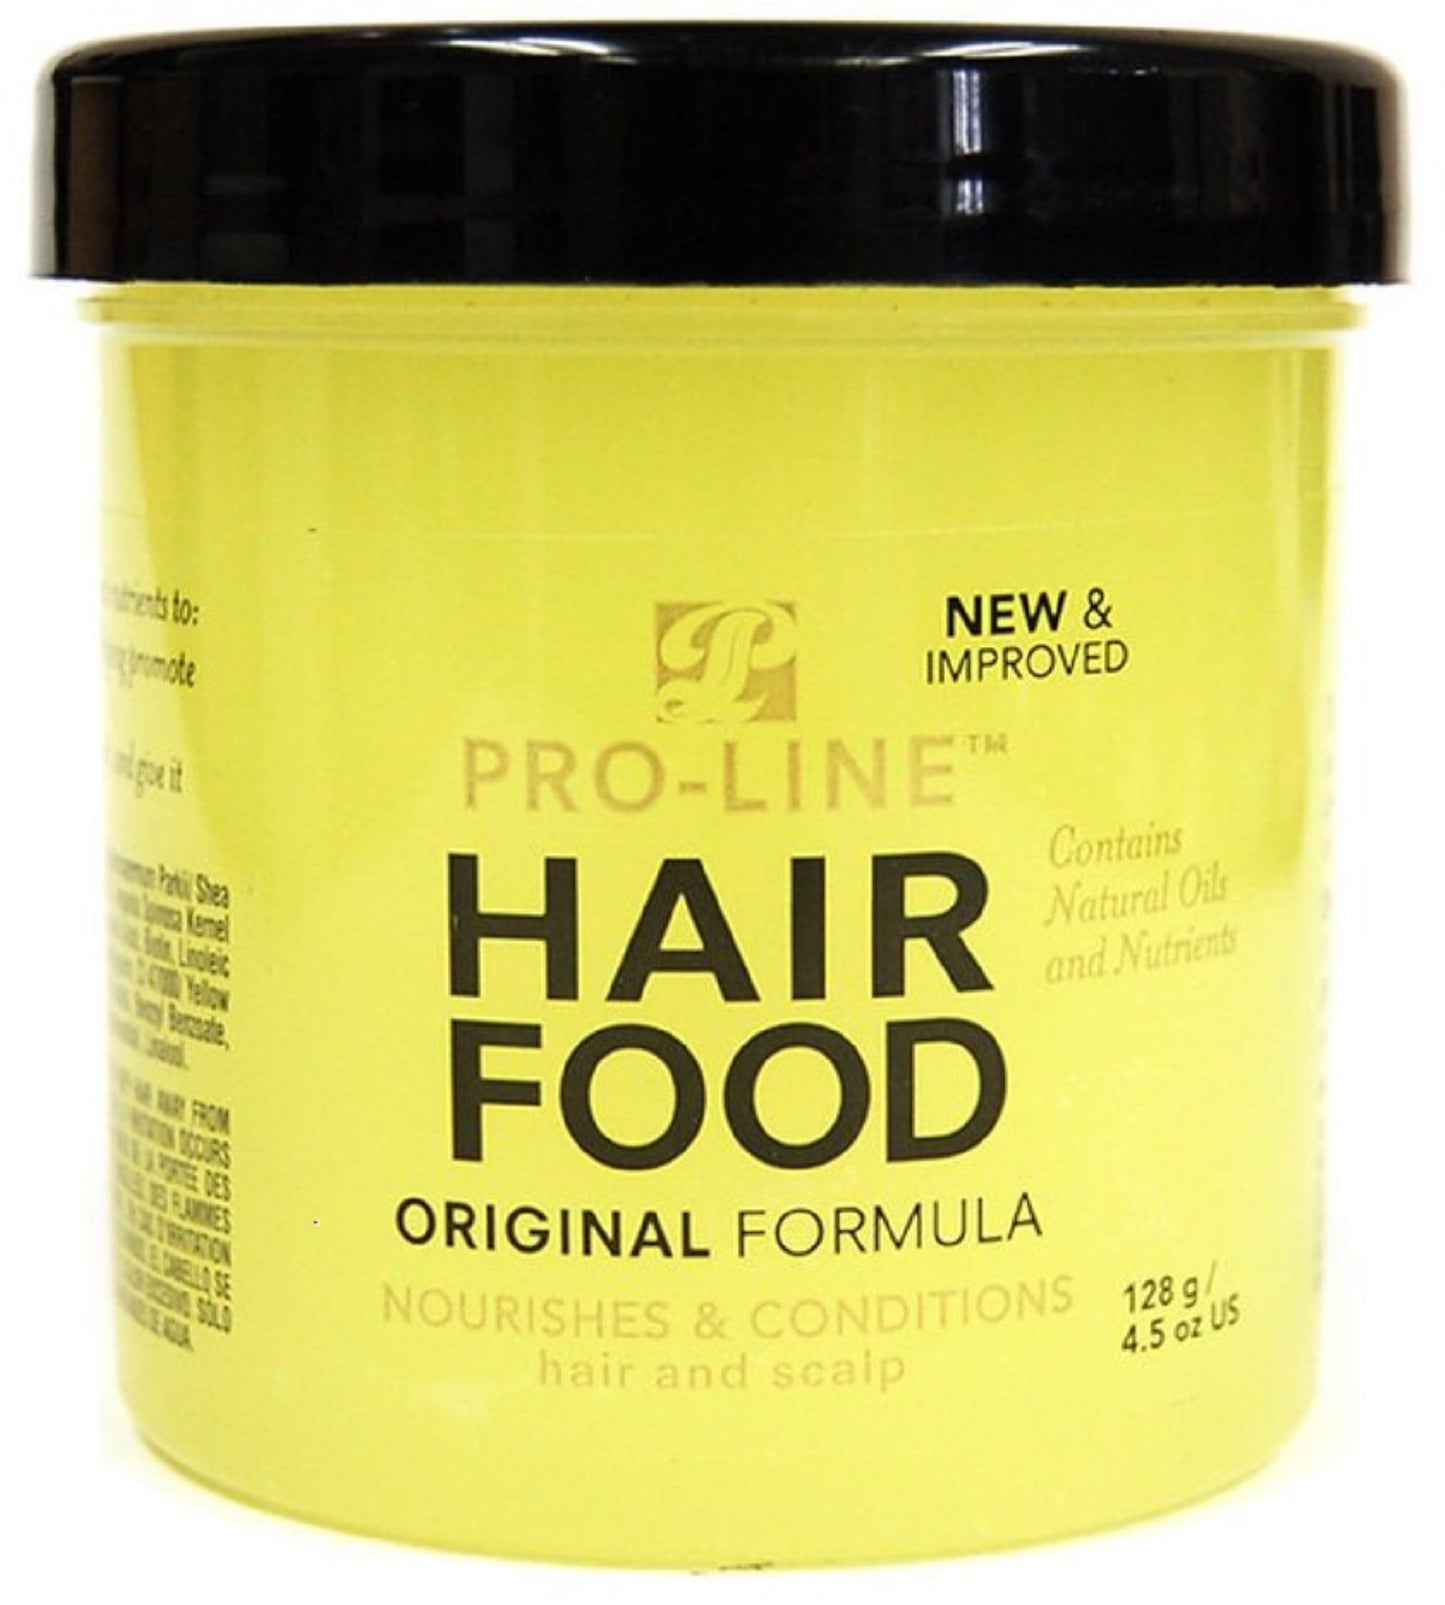 Pro-Line Hair Food Original 4.5 oz